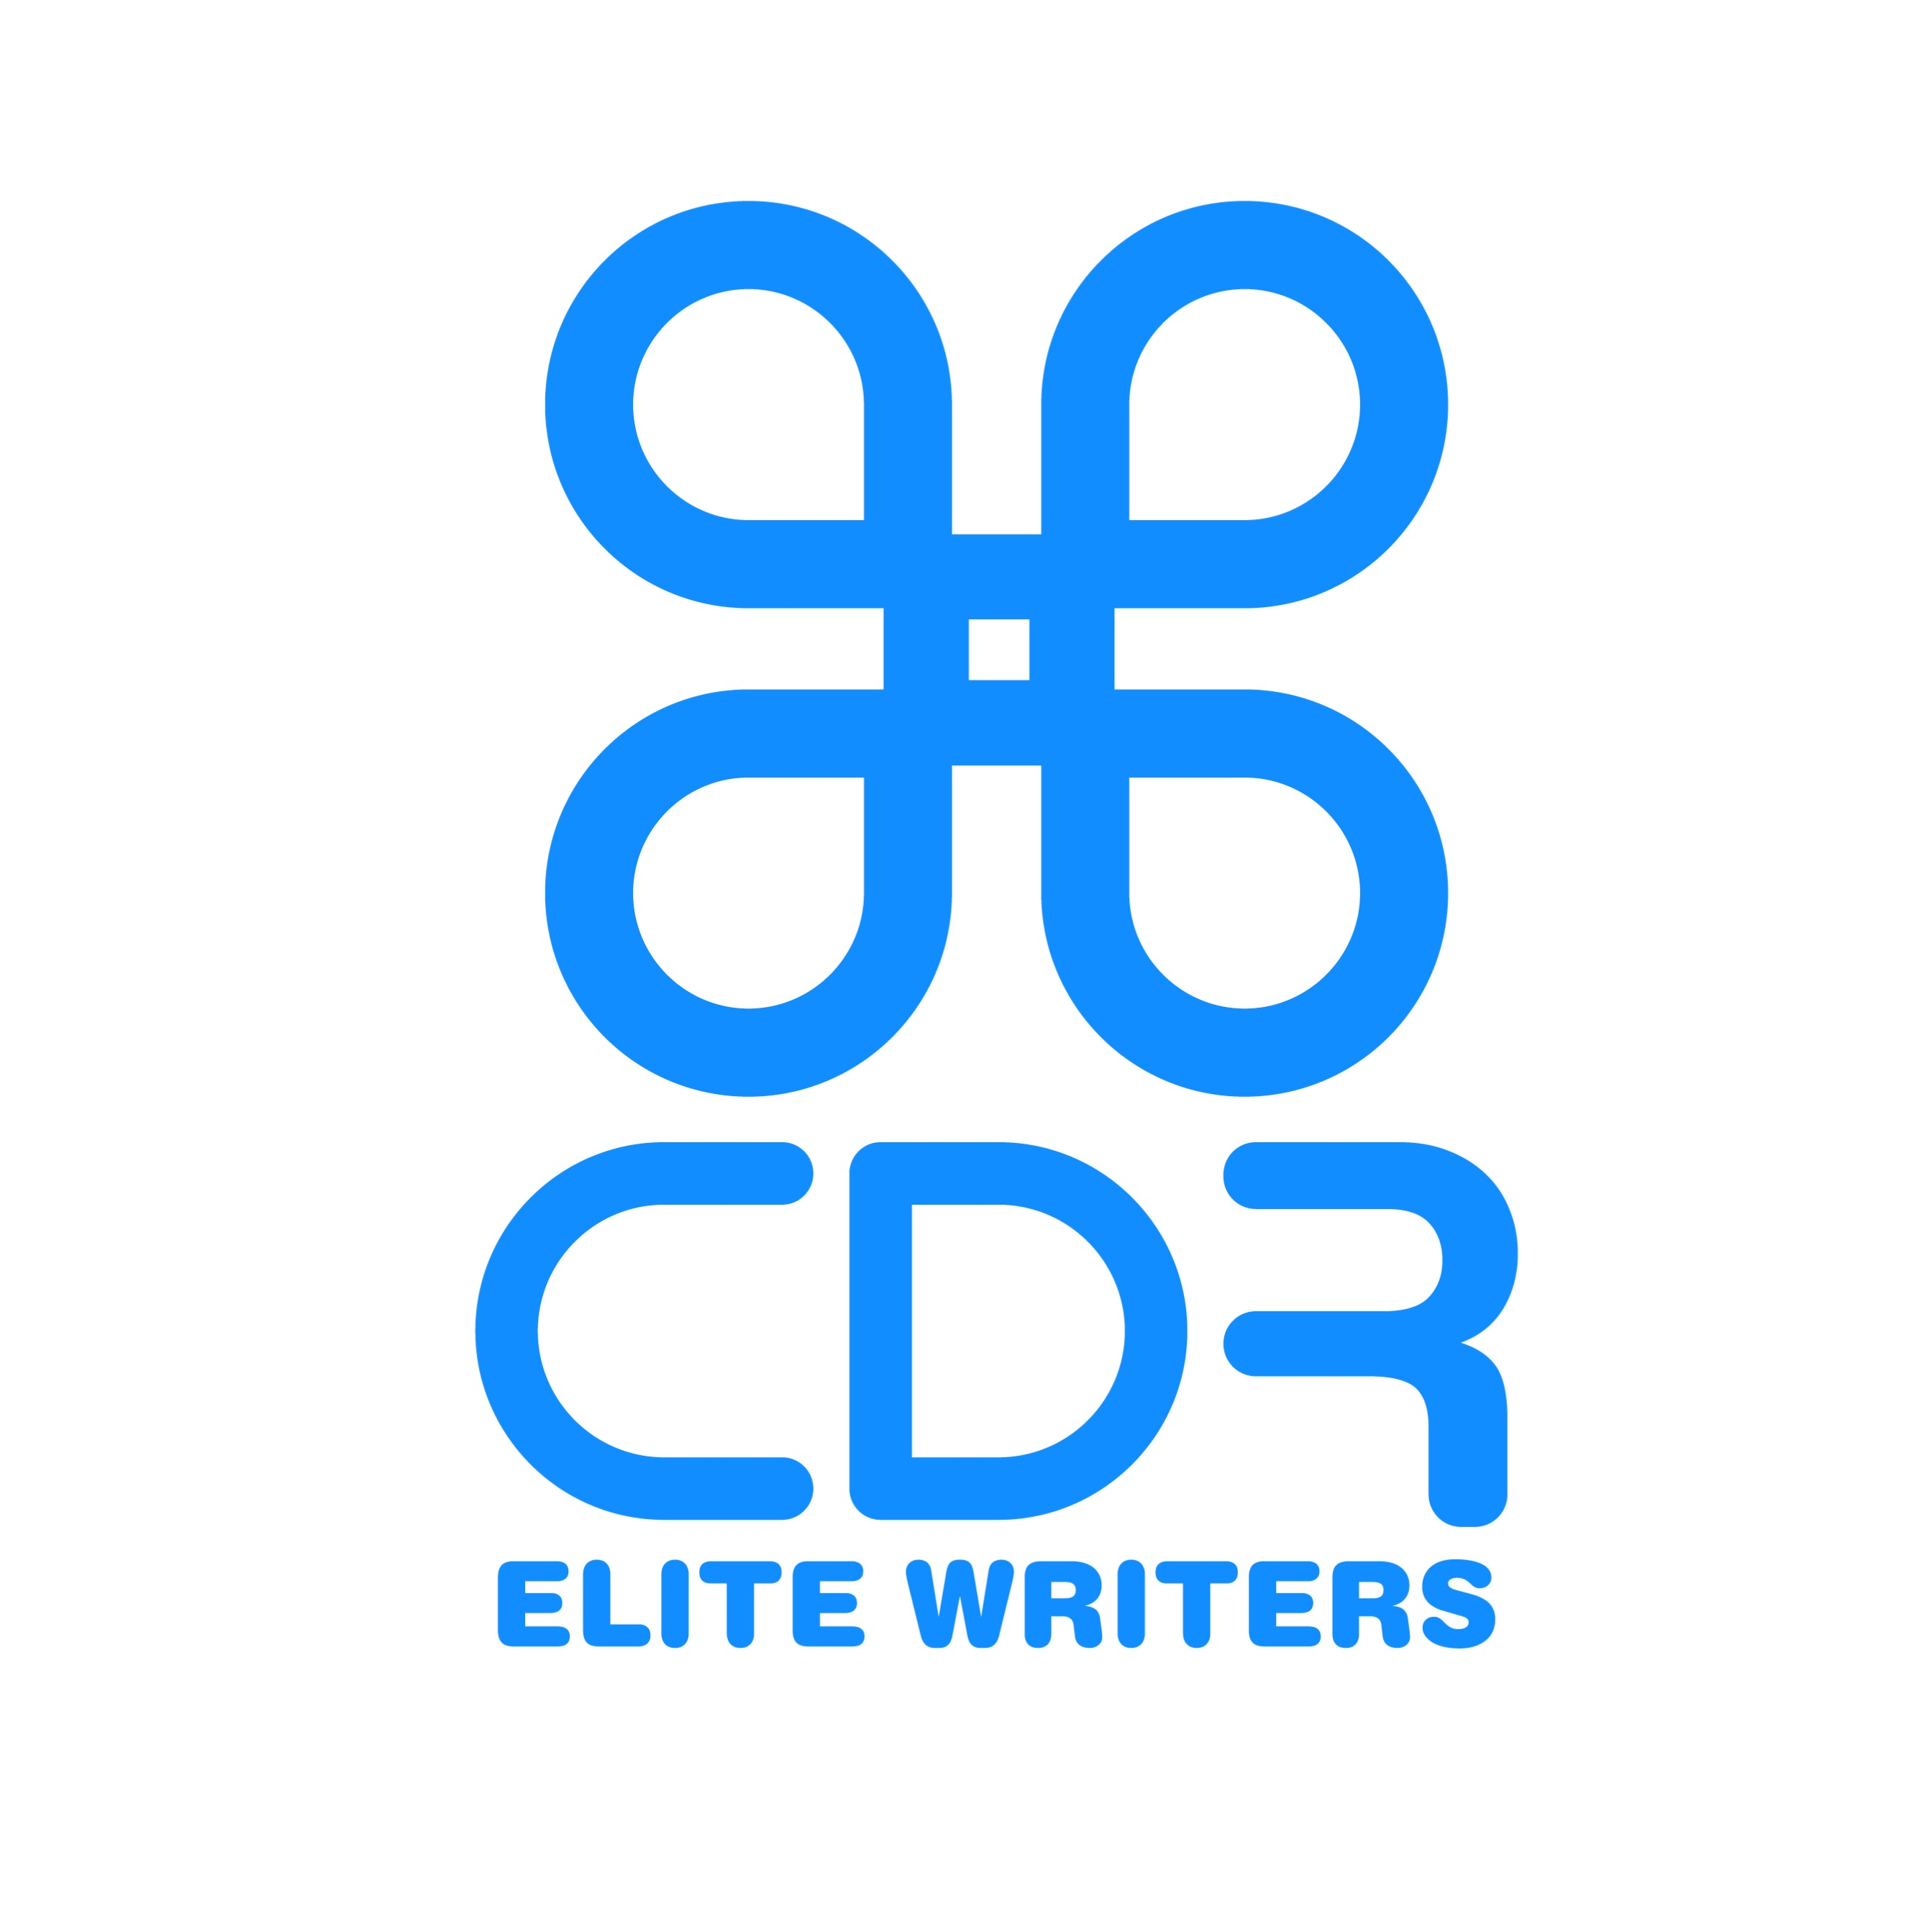 CDR Elite Writers - Carlton, VIC 3053 - 0485 974 843 | ShowMeLocal.com